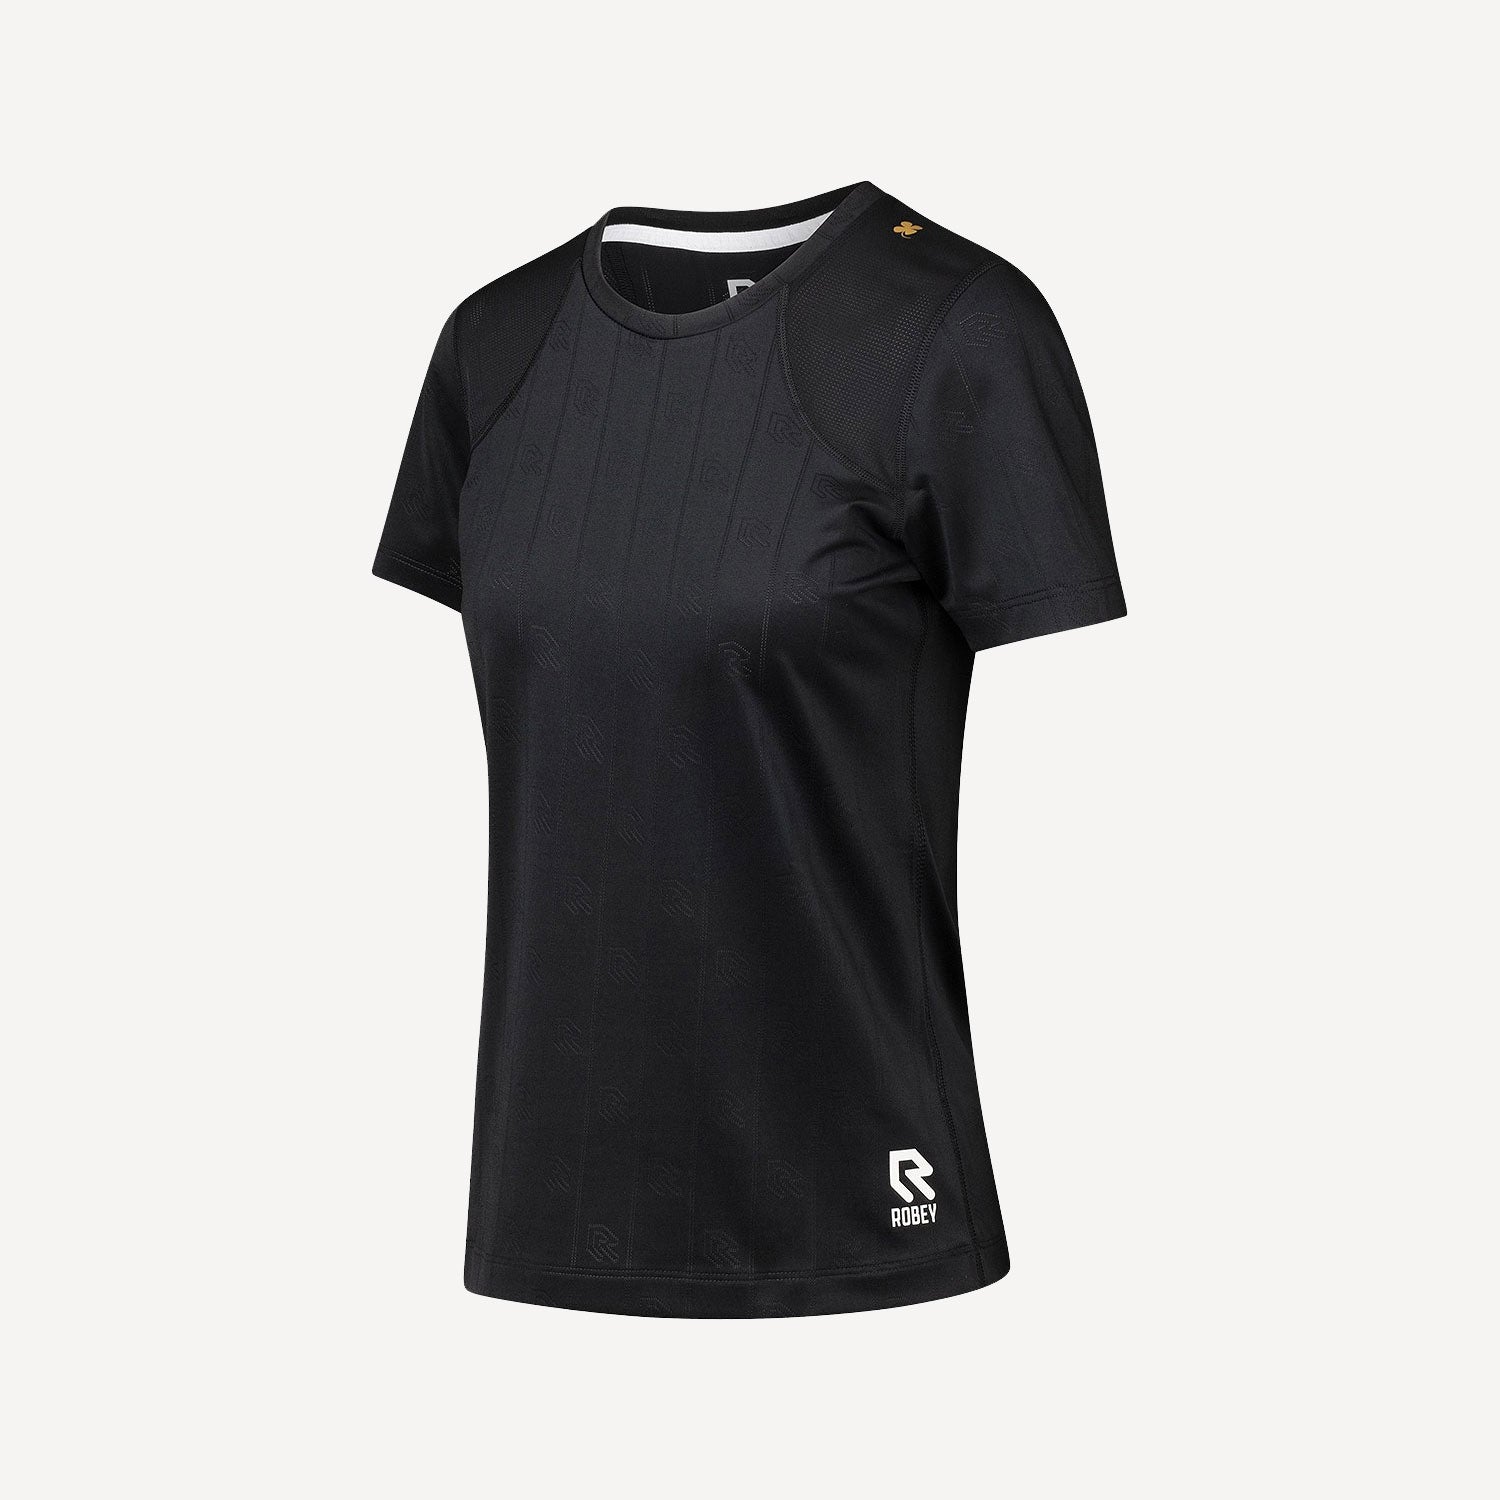 Robey Ace Women's Tennis Shirt - Black (4)